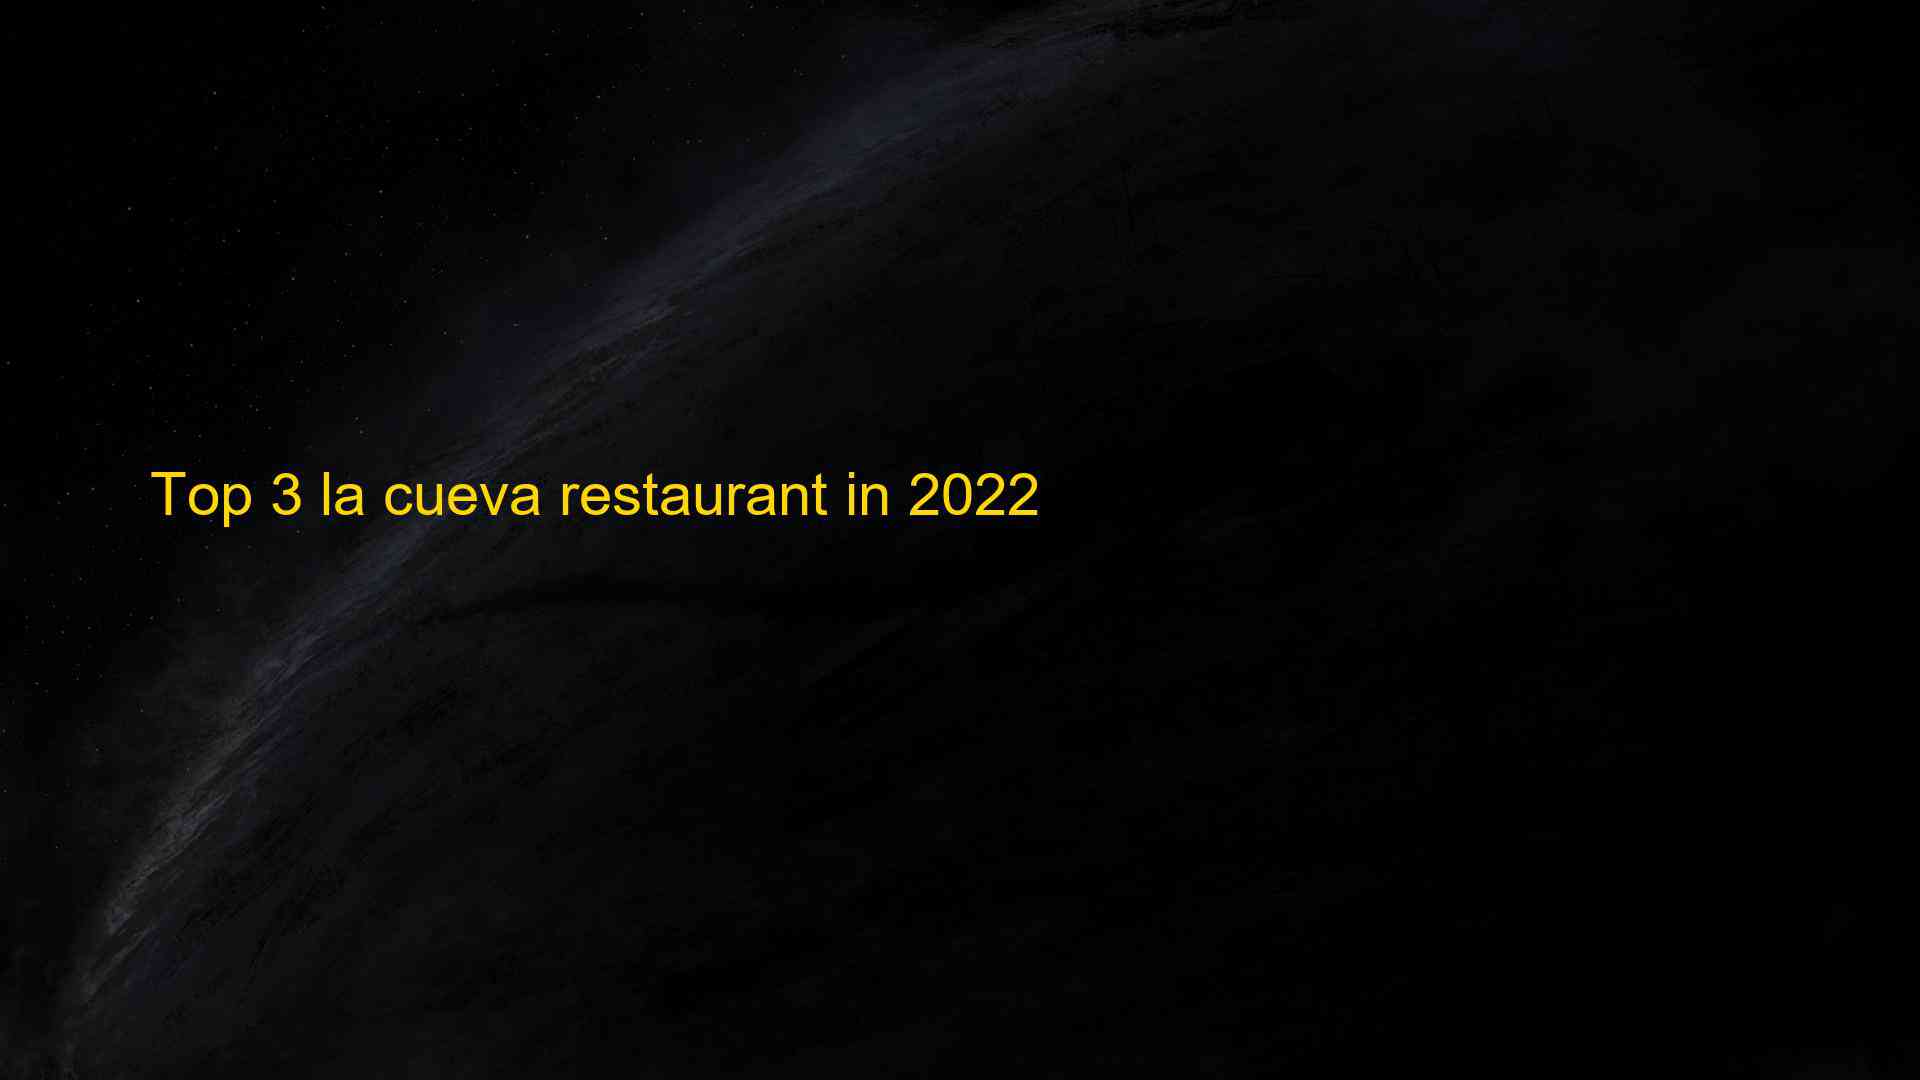 Top 3 la cueva restaurant in 2022 1662843188